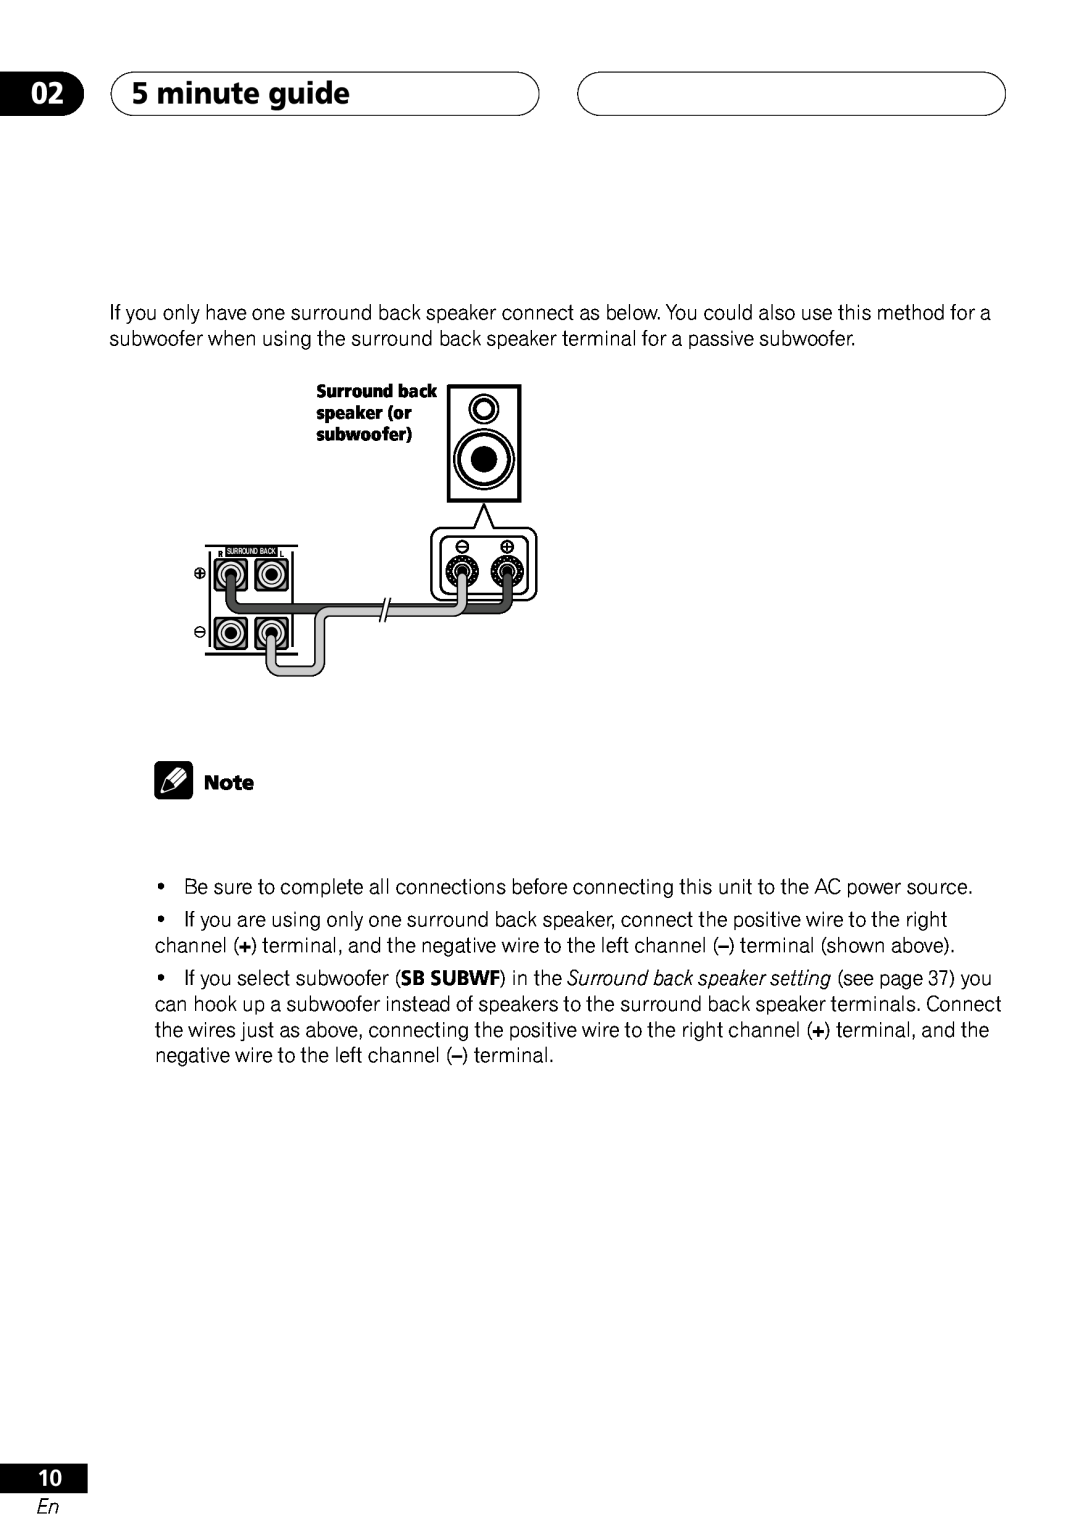 Pioneer VSX-41 manual 02 5 minute guide, Surround back speaker or subwoofer 